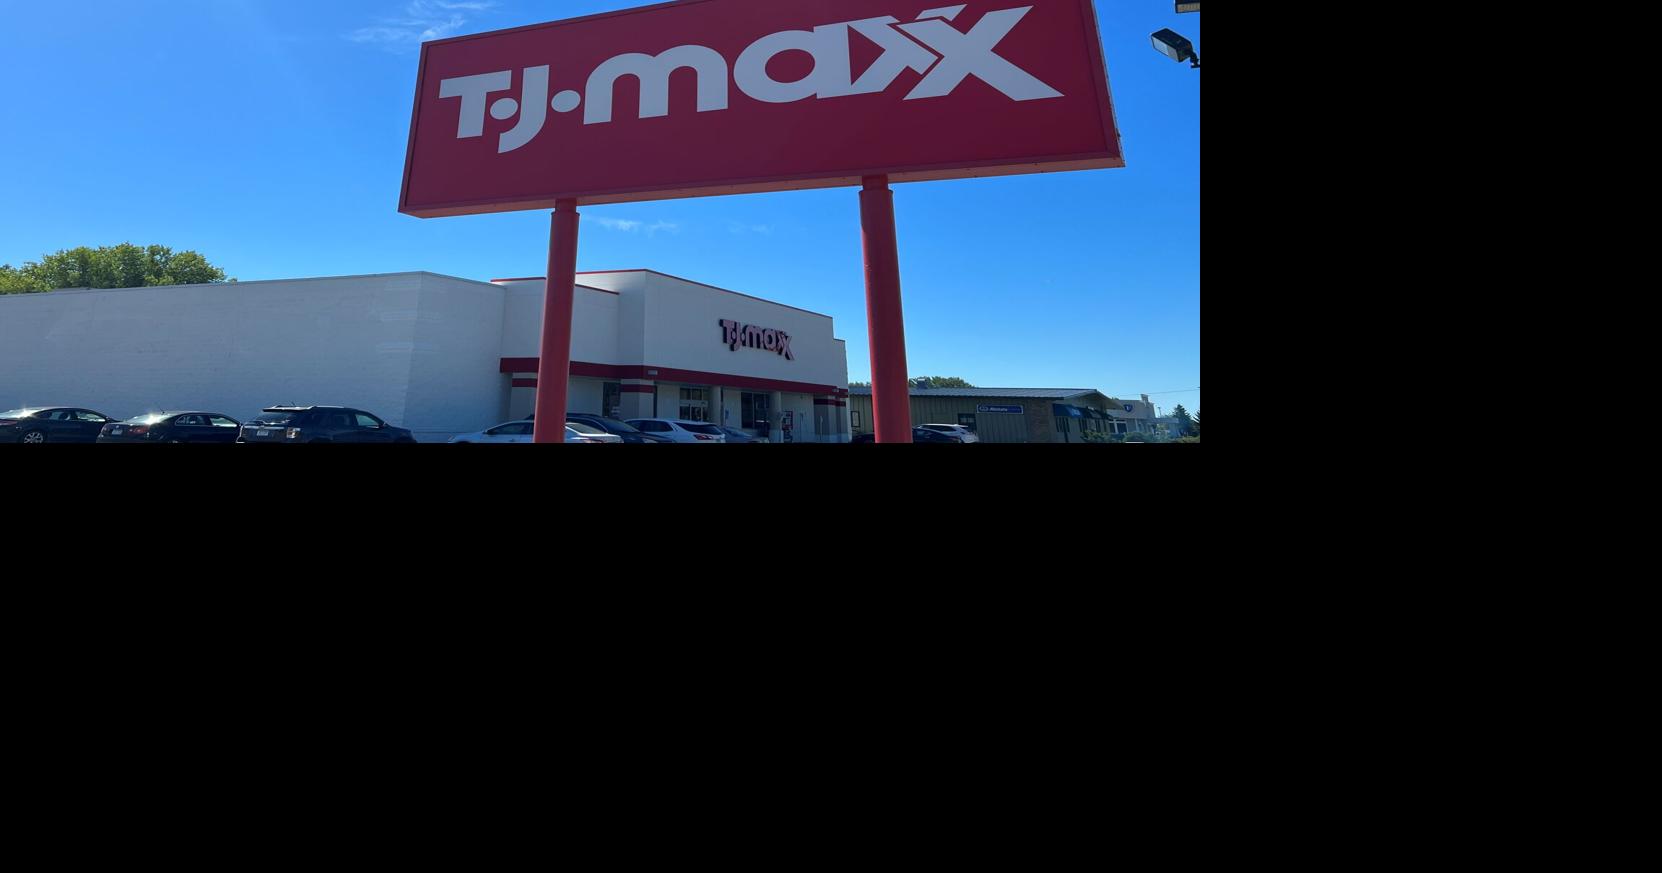 T.J. Maxx to open Aug. 13 in Willmar - West Central Tribune